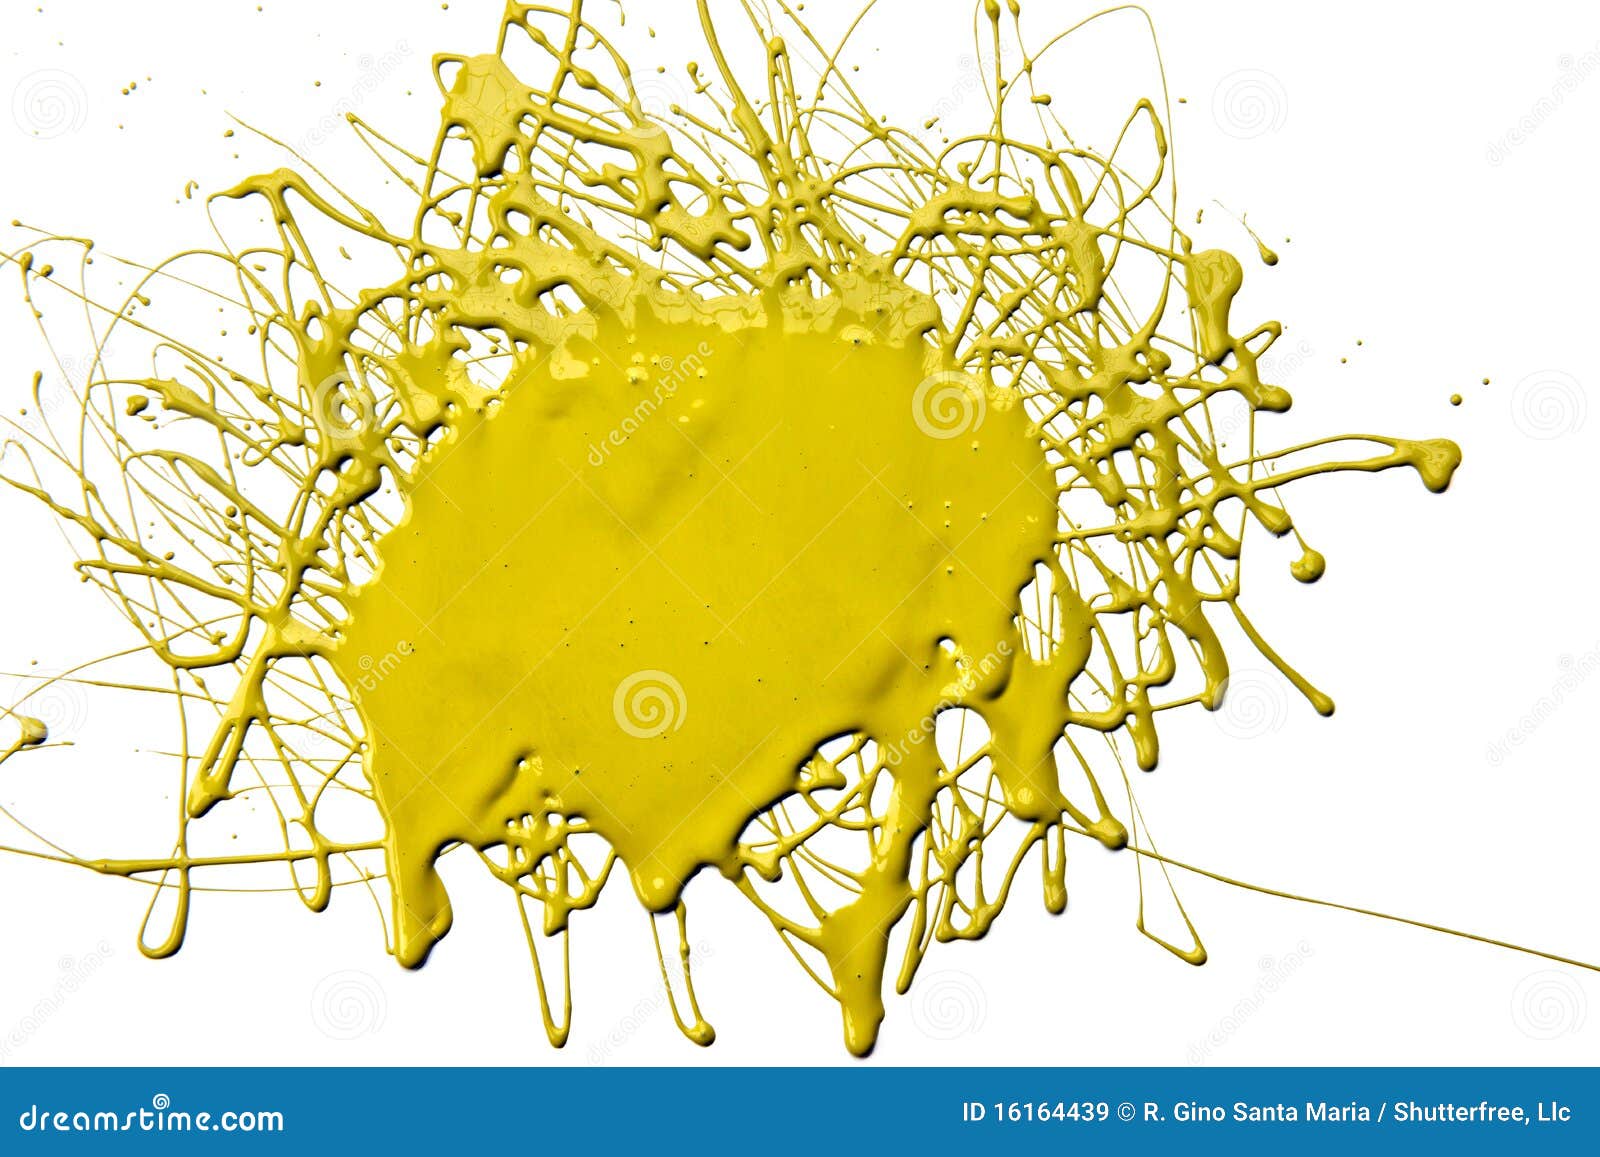 splattered yellow paint